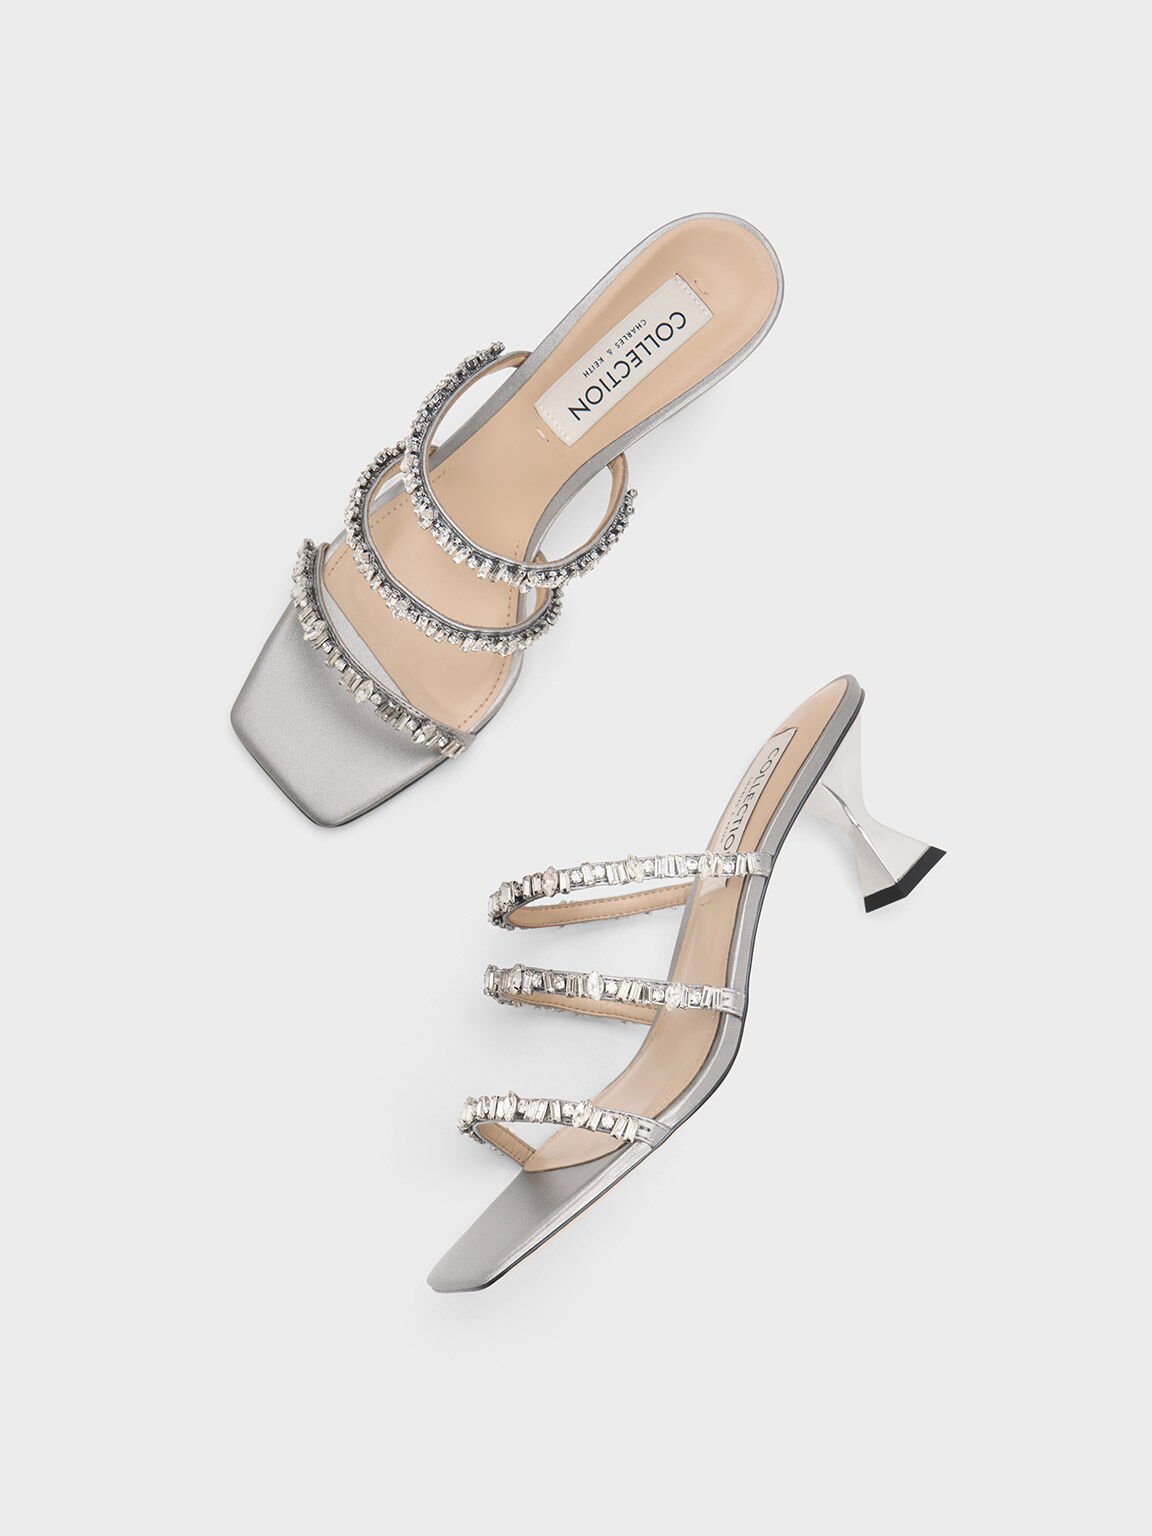 Gem-Encrusted Metallic Strappy Sandals, Silver, hi-res